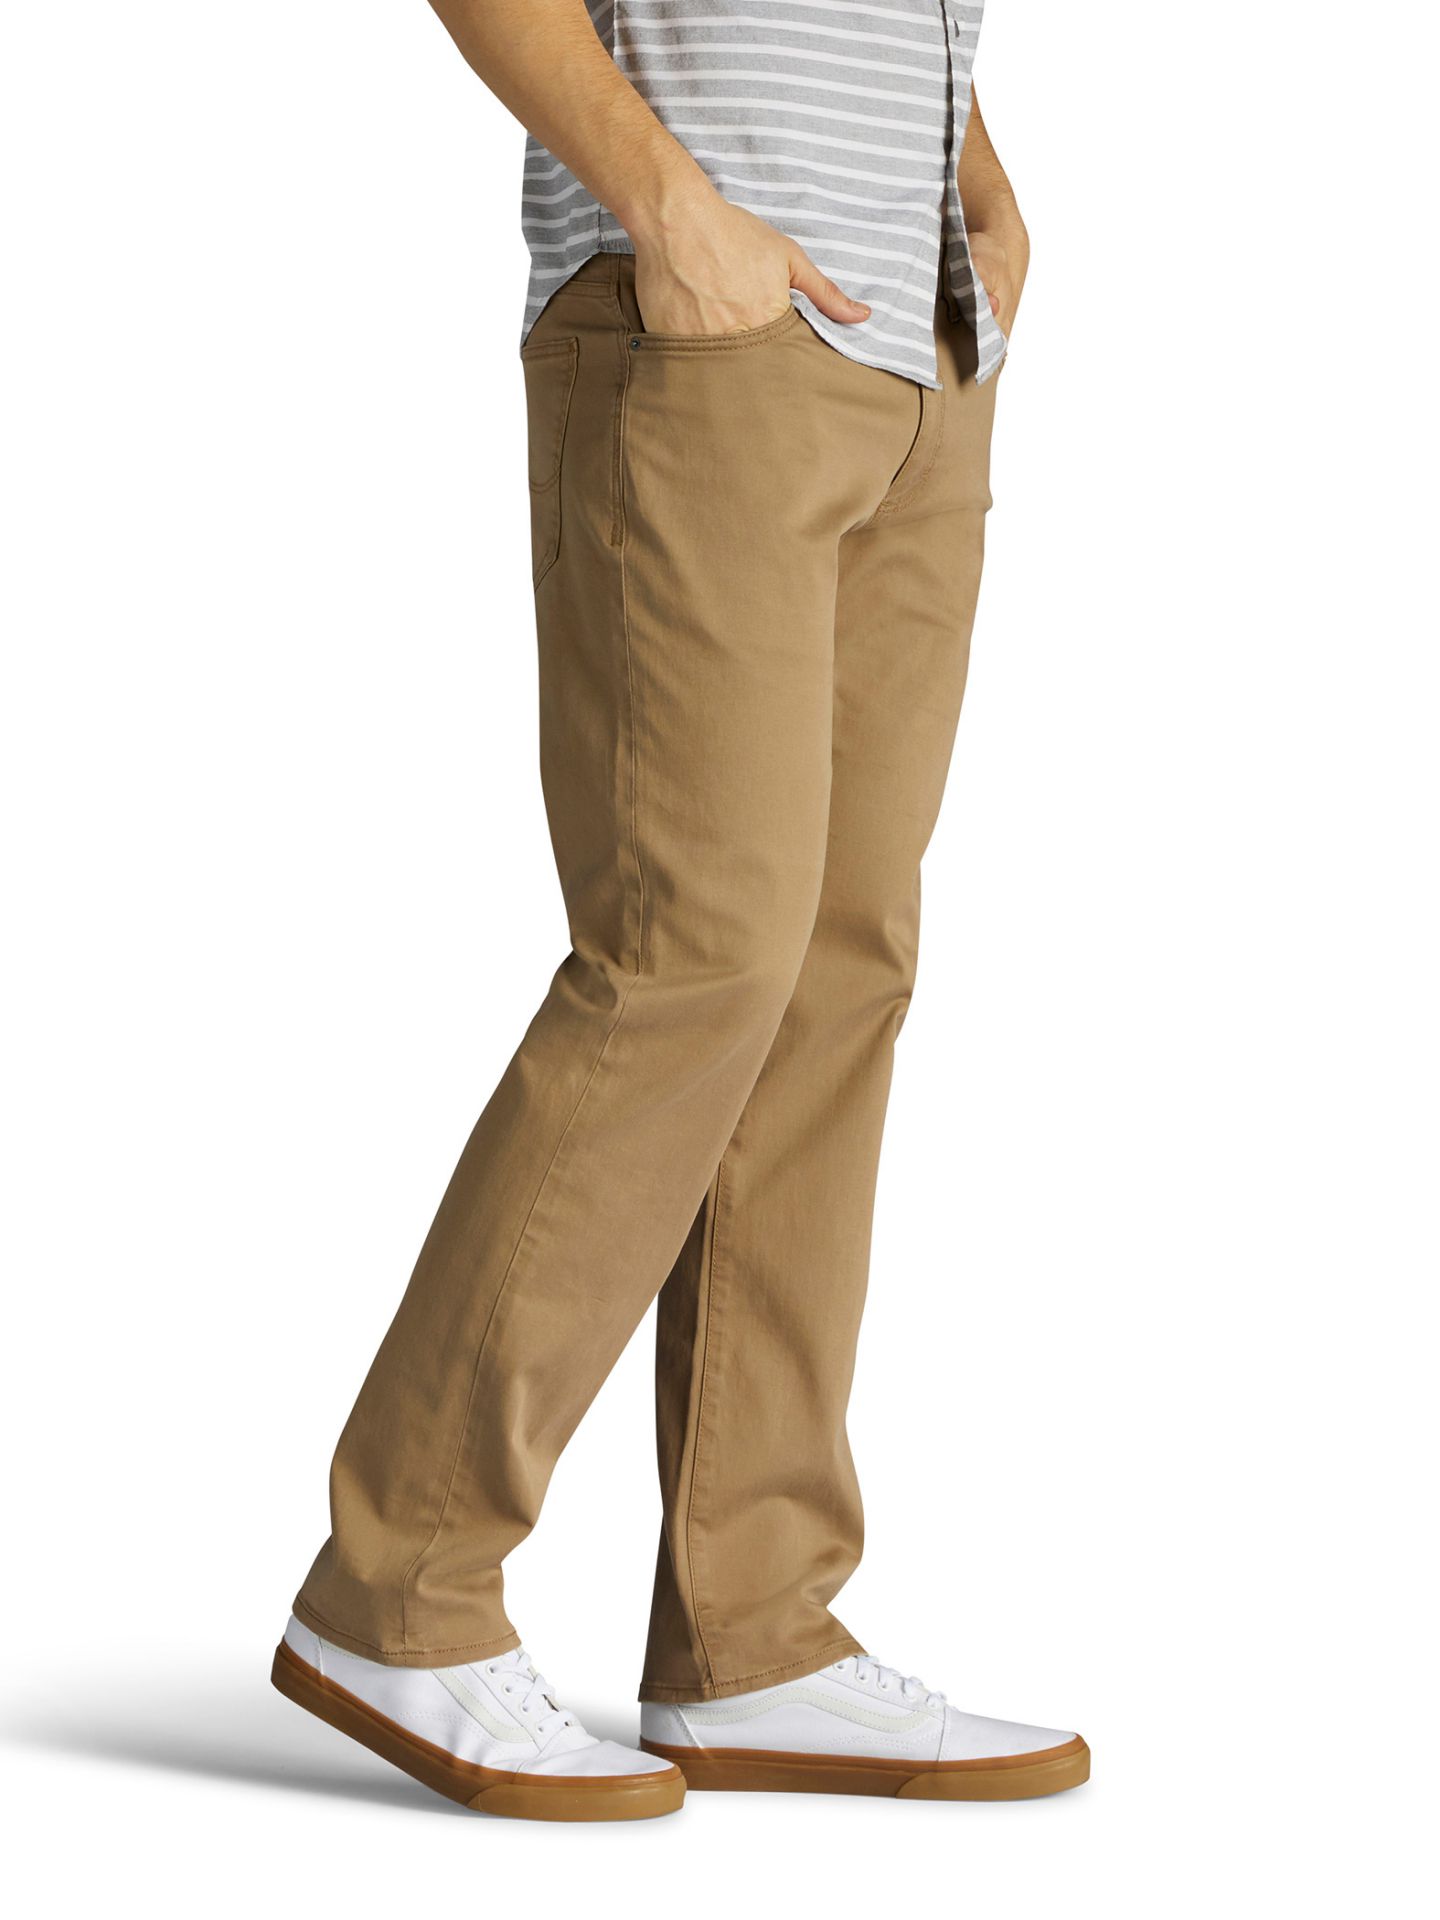 Extreme | Lee Stretch sale Pants eBay Motion Cougar 30x32 Khaki 5 online Midrise Pocket Straight for